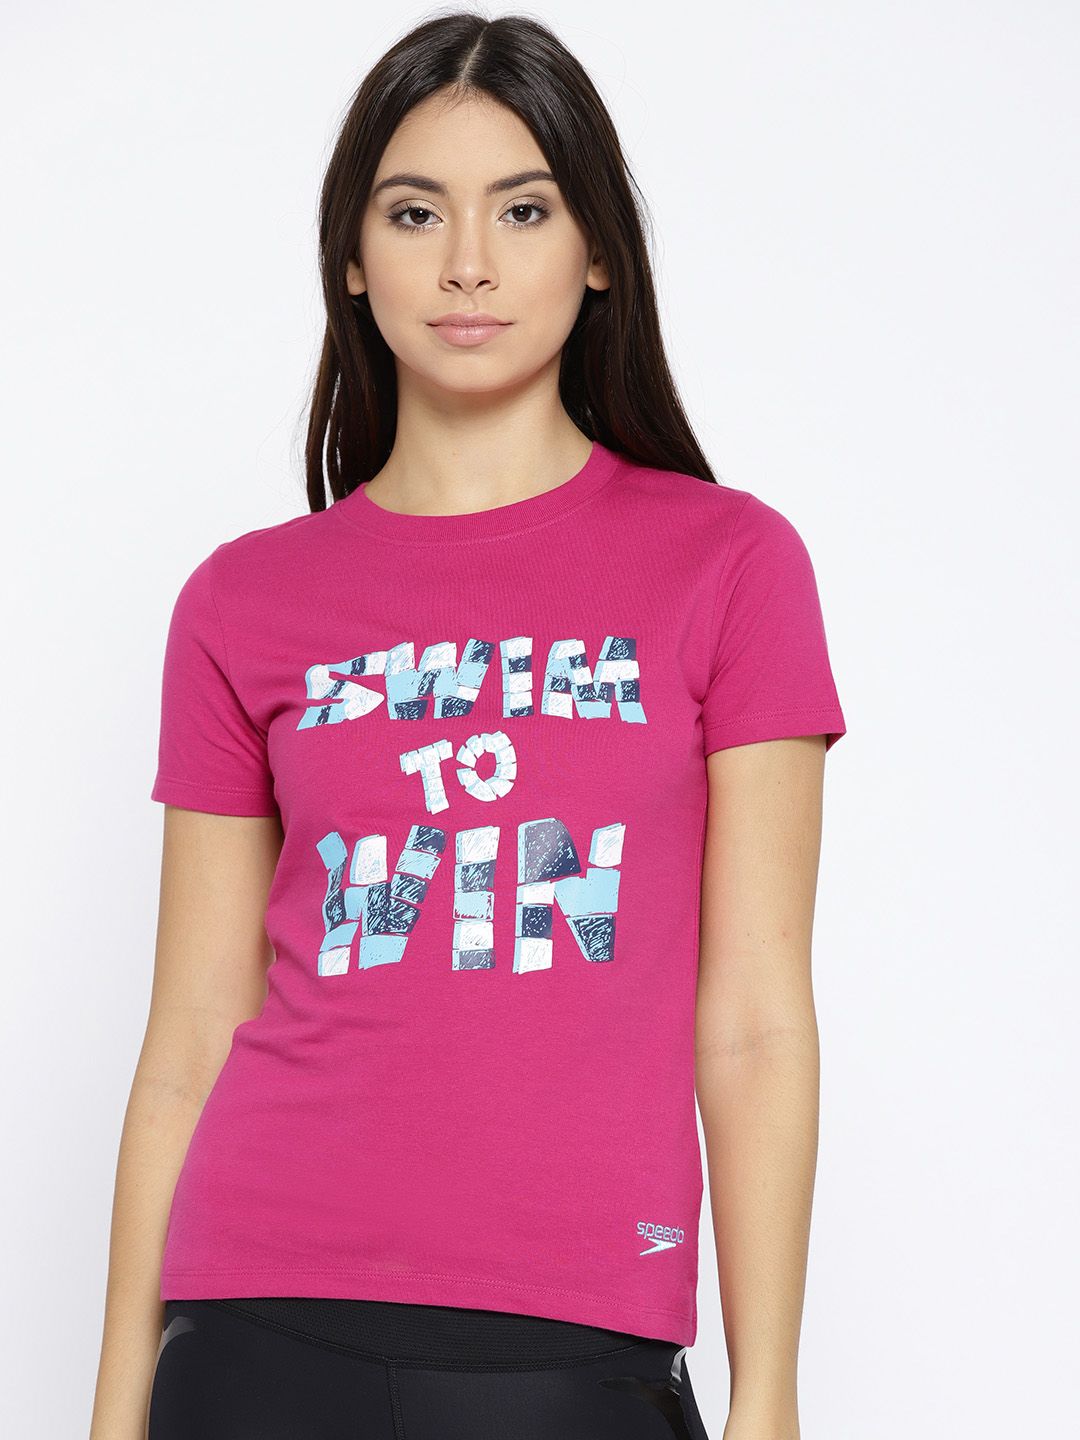 Speedo Women Pink Printed Round Neck T-shirt Price in India